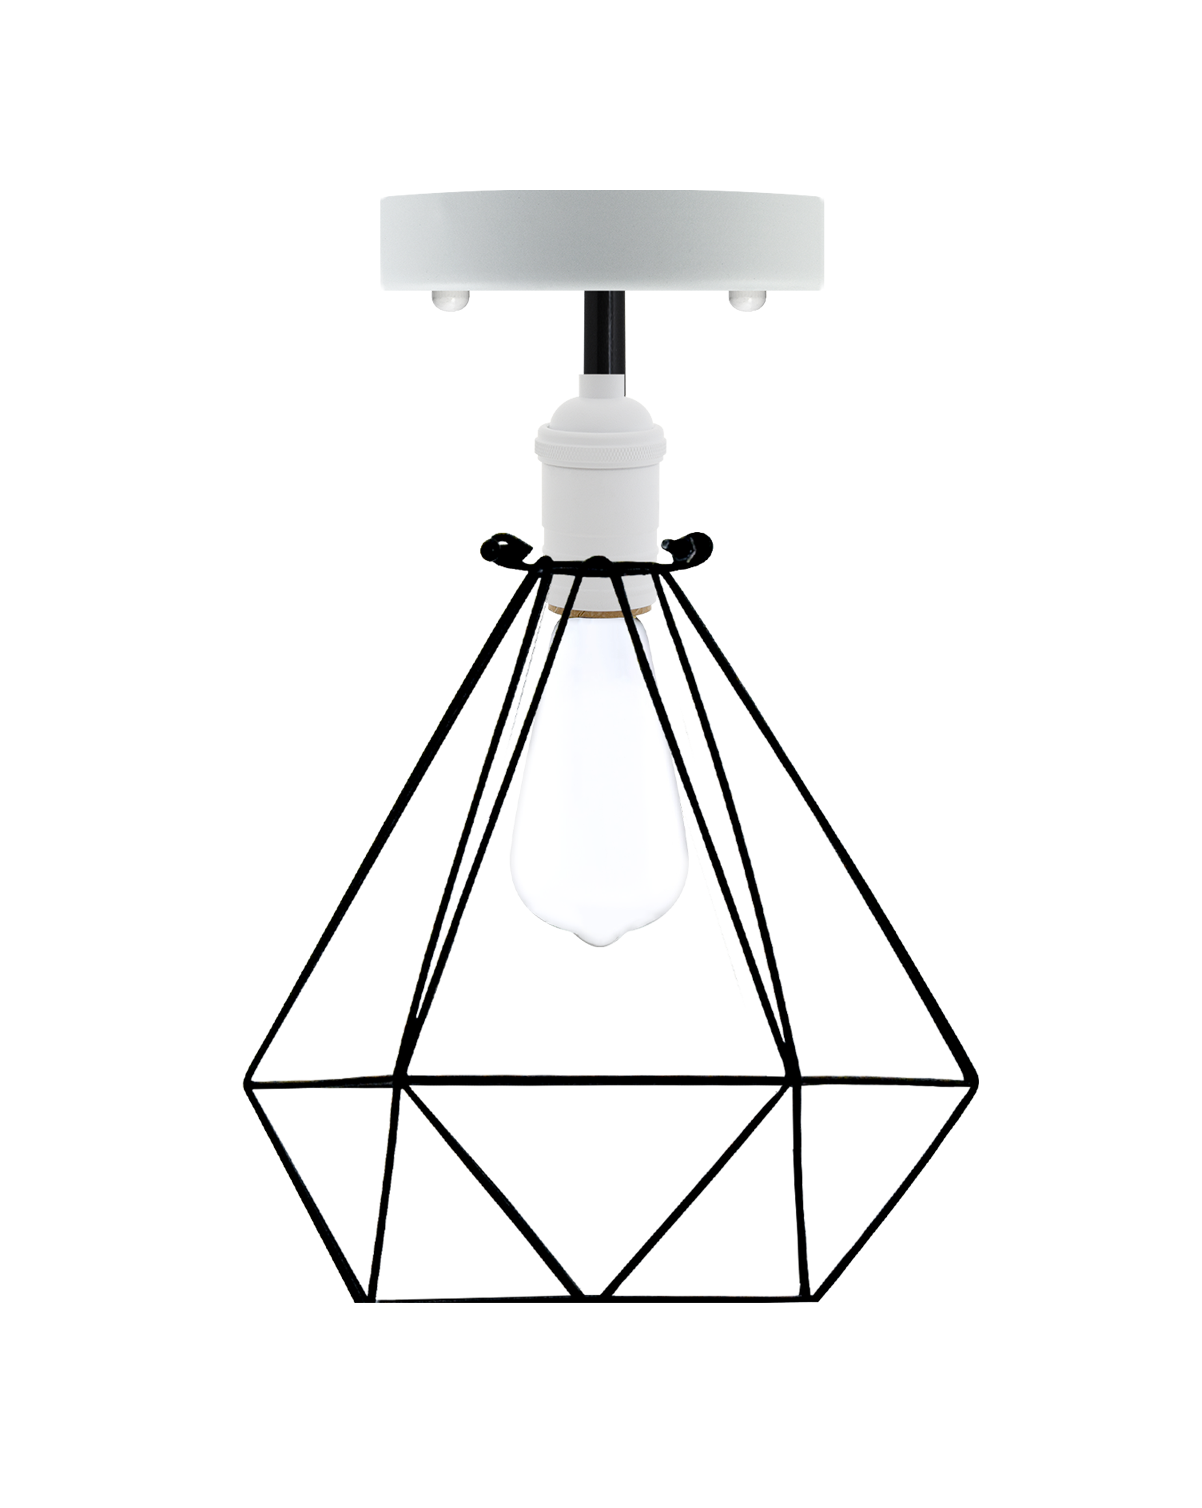 Semi Flush Mount: White with Black Diamond Cage Hangout Lighting 